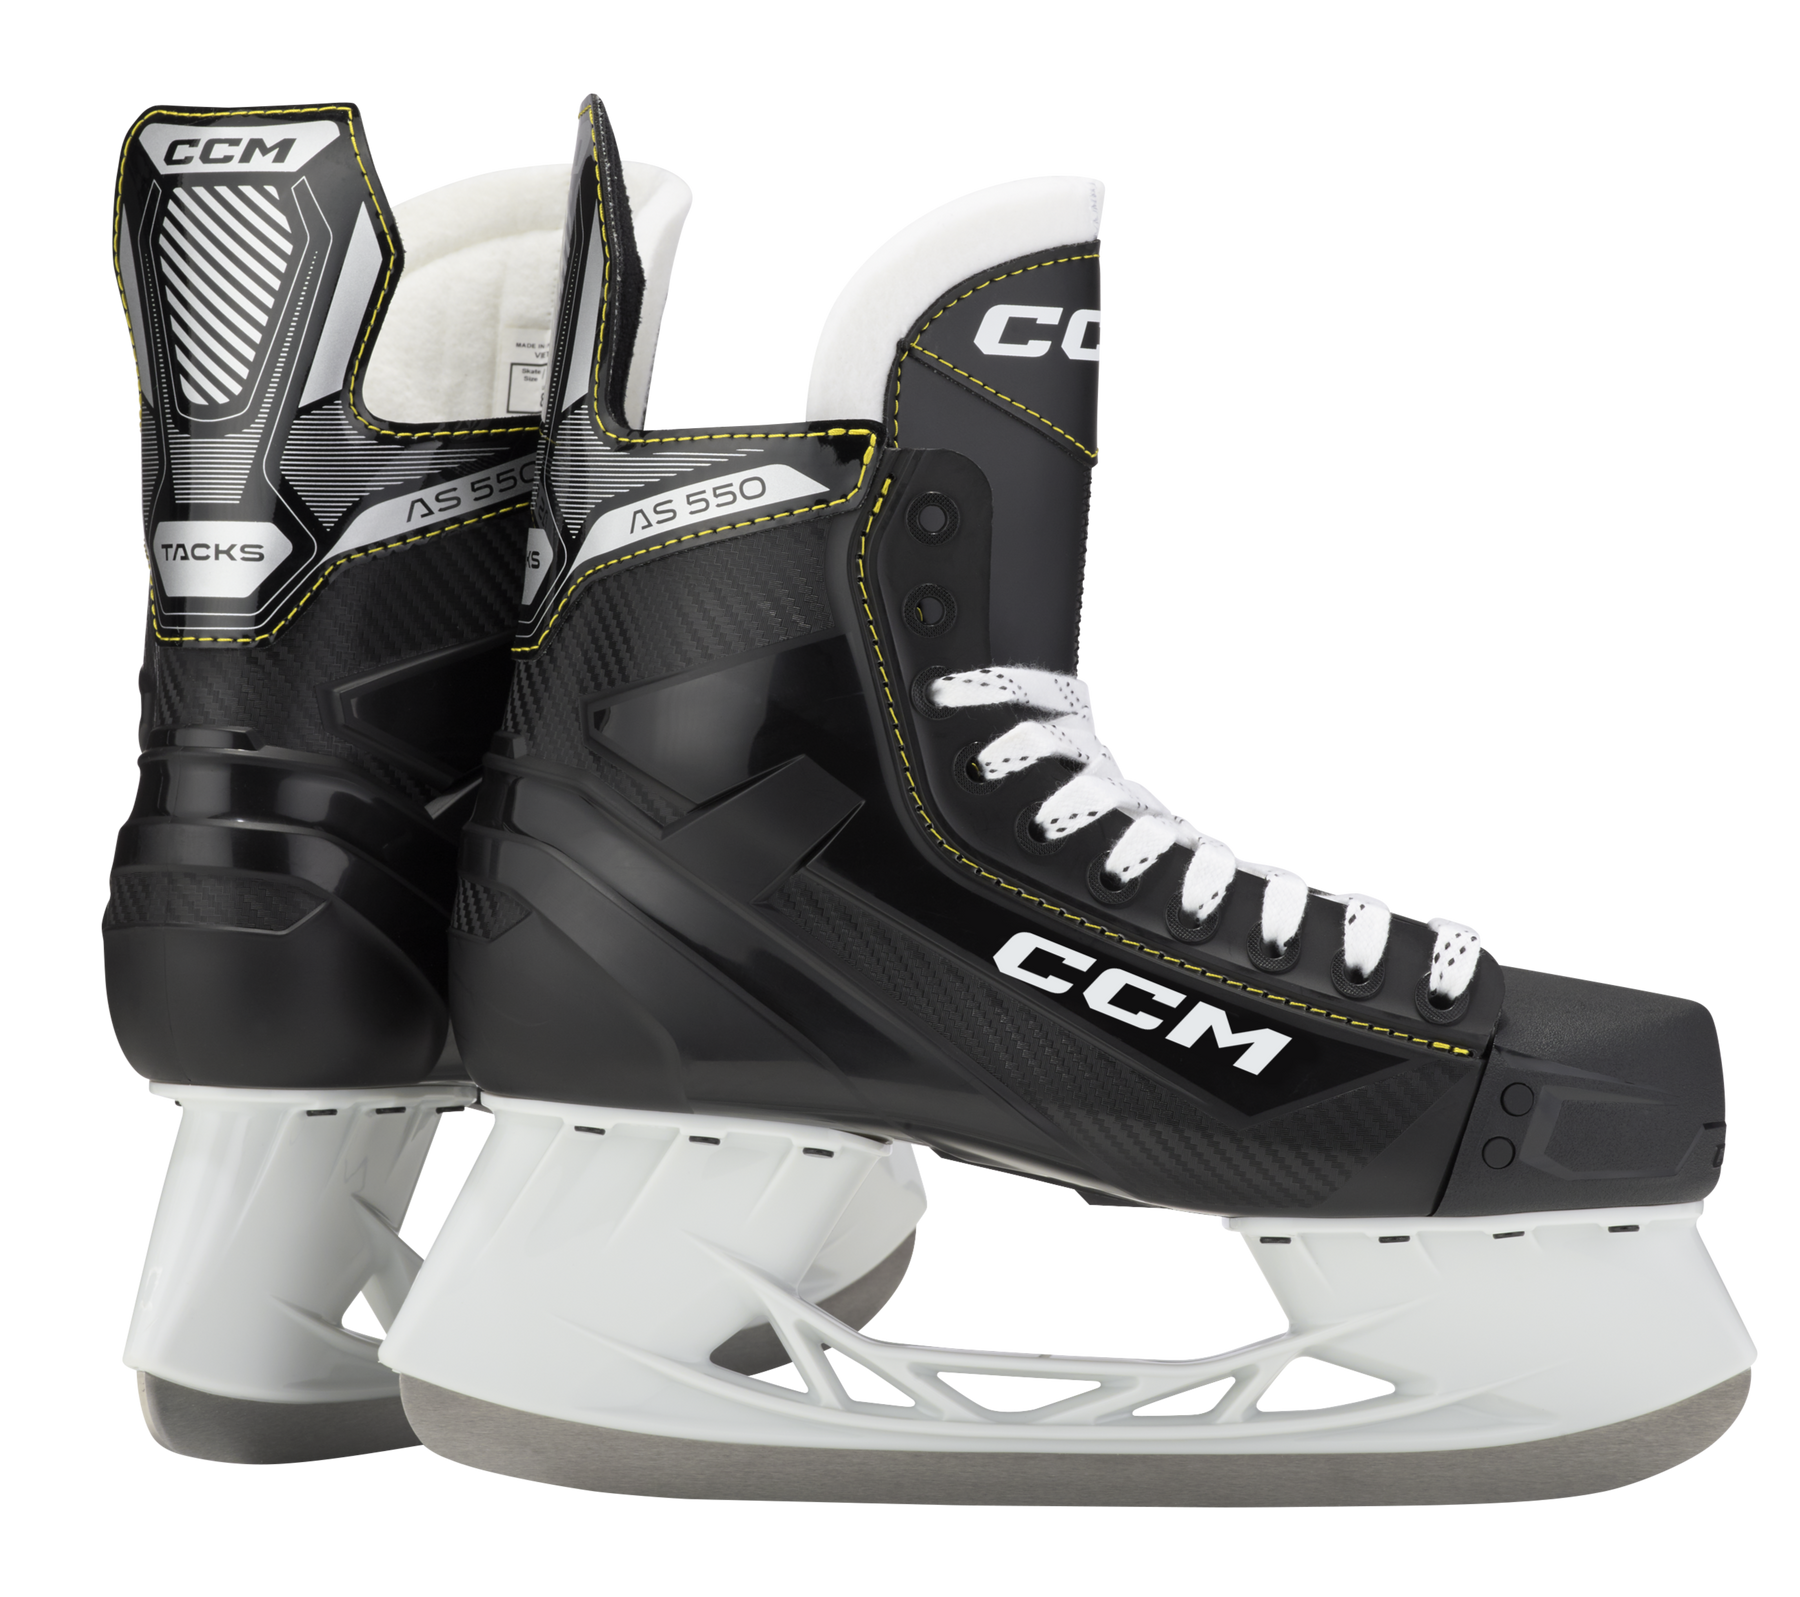 CCM TACKS AS 580 Patins de hockey - Patins à glace sénior